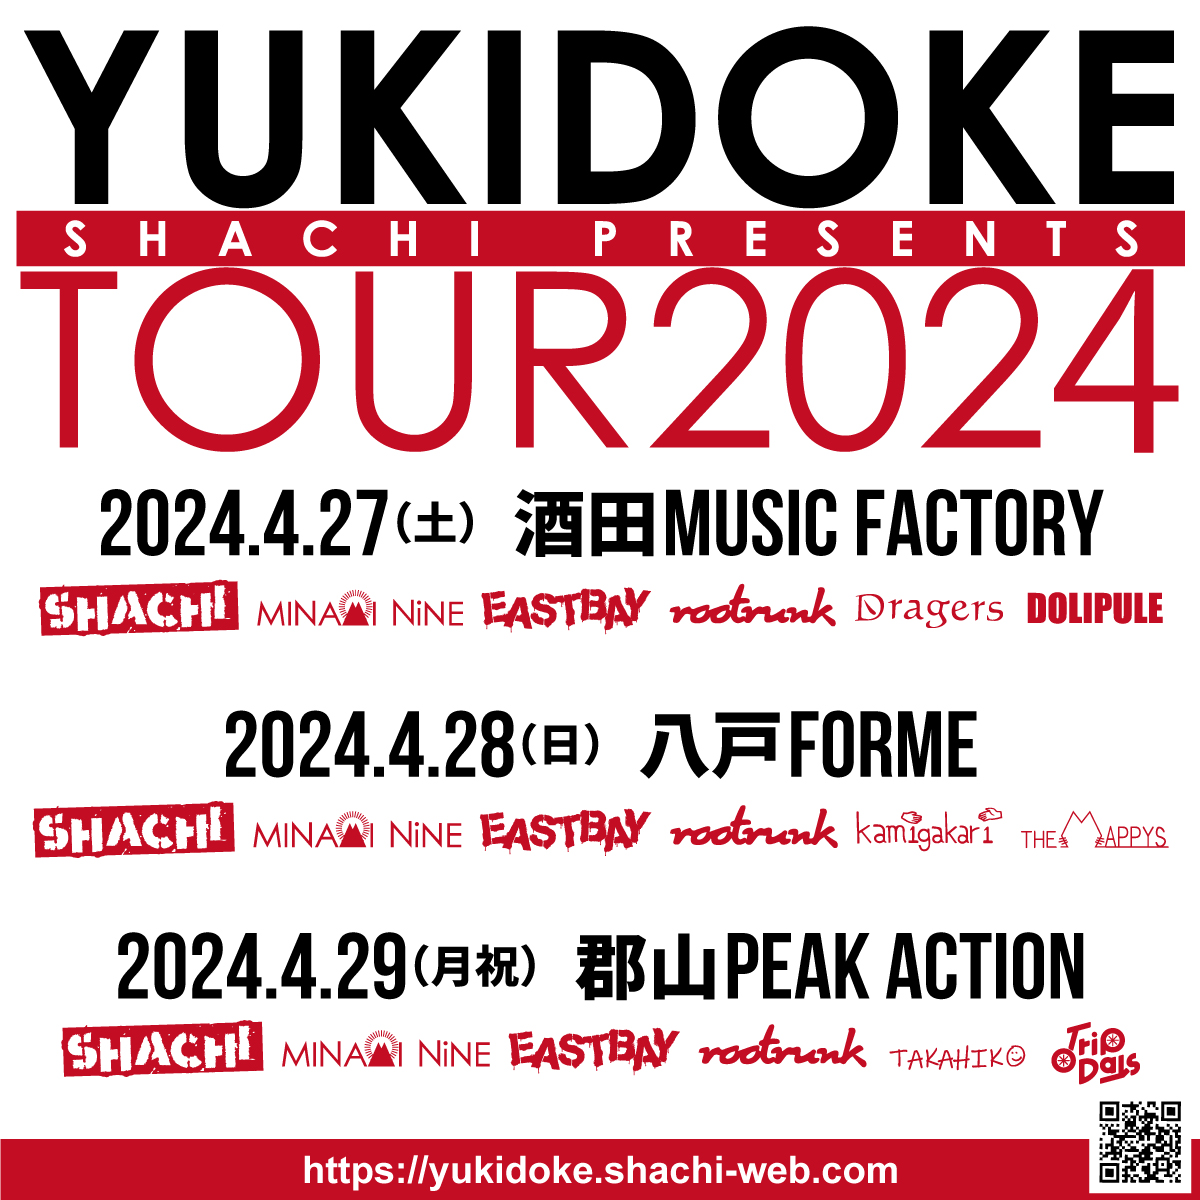 SHACHI pre “YUKIDOKE TOUR2024” 八戸の写真